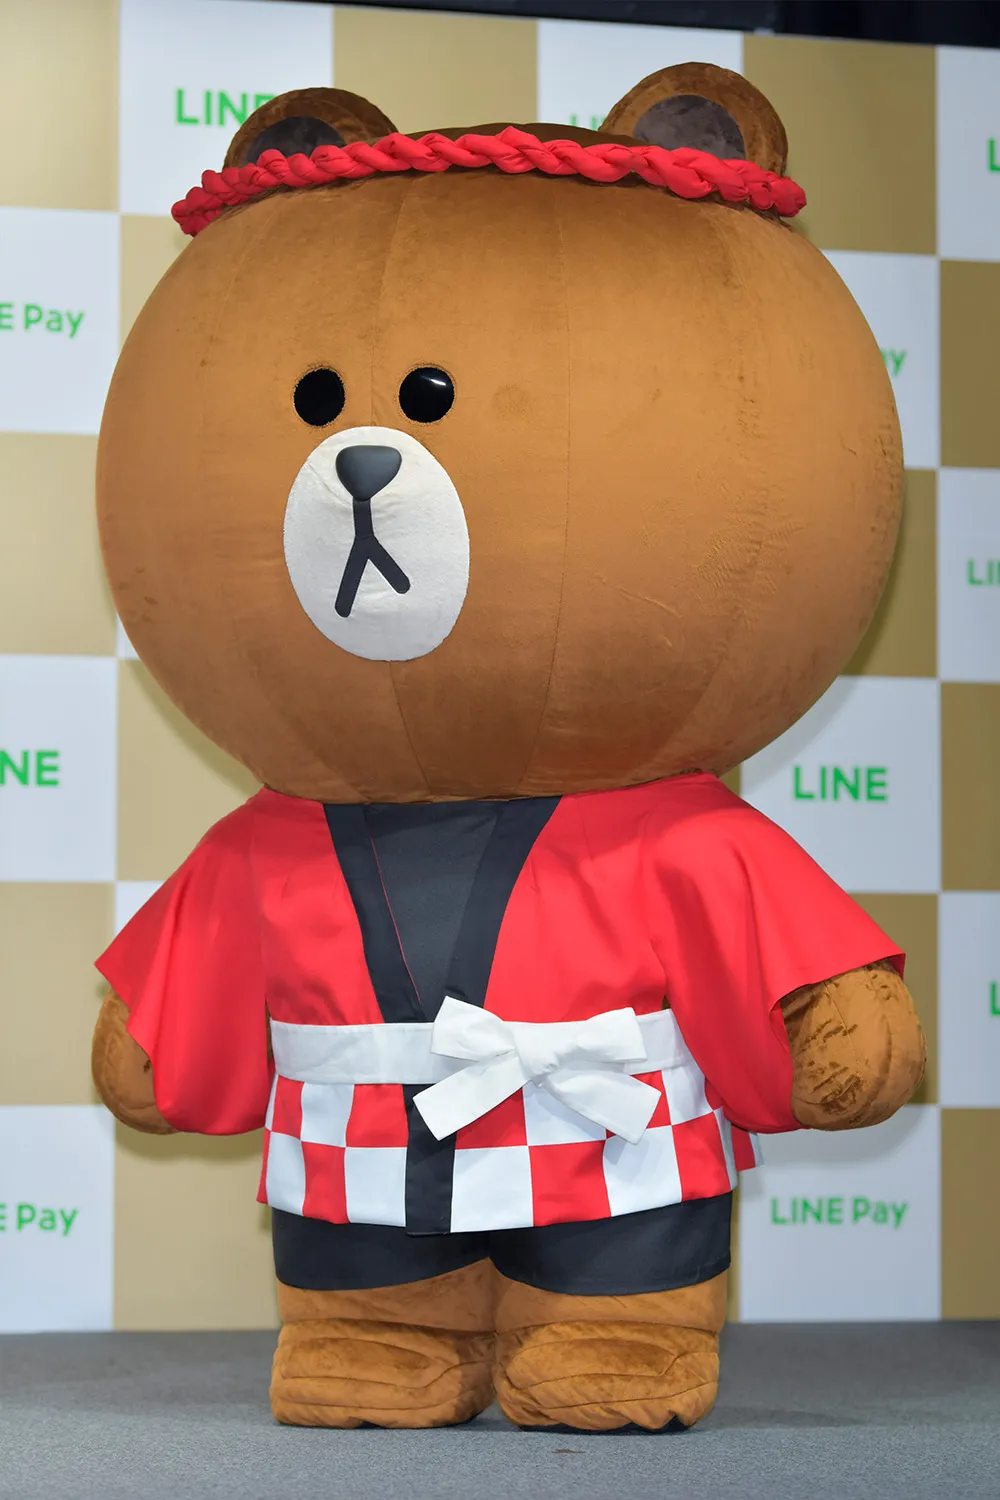 「LINE・LINE Pay」記者発表会より　 